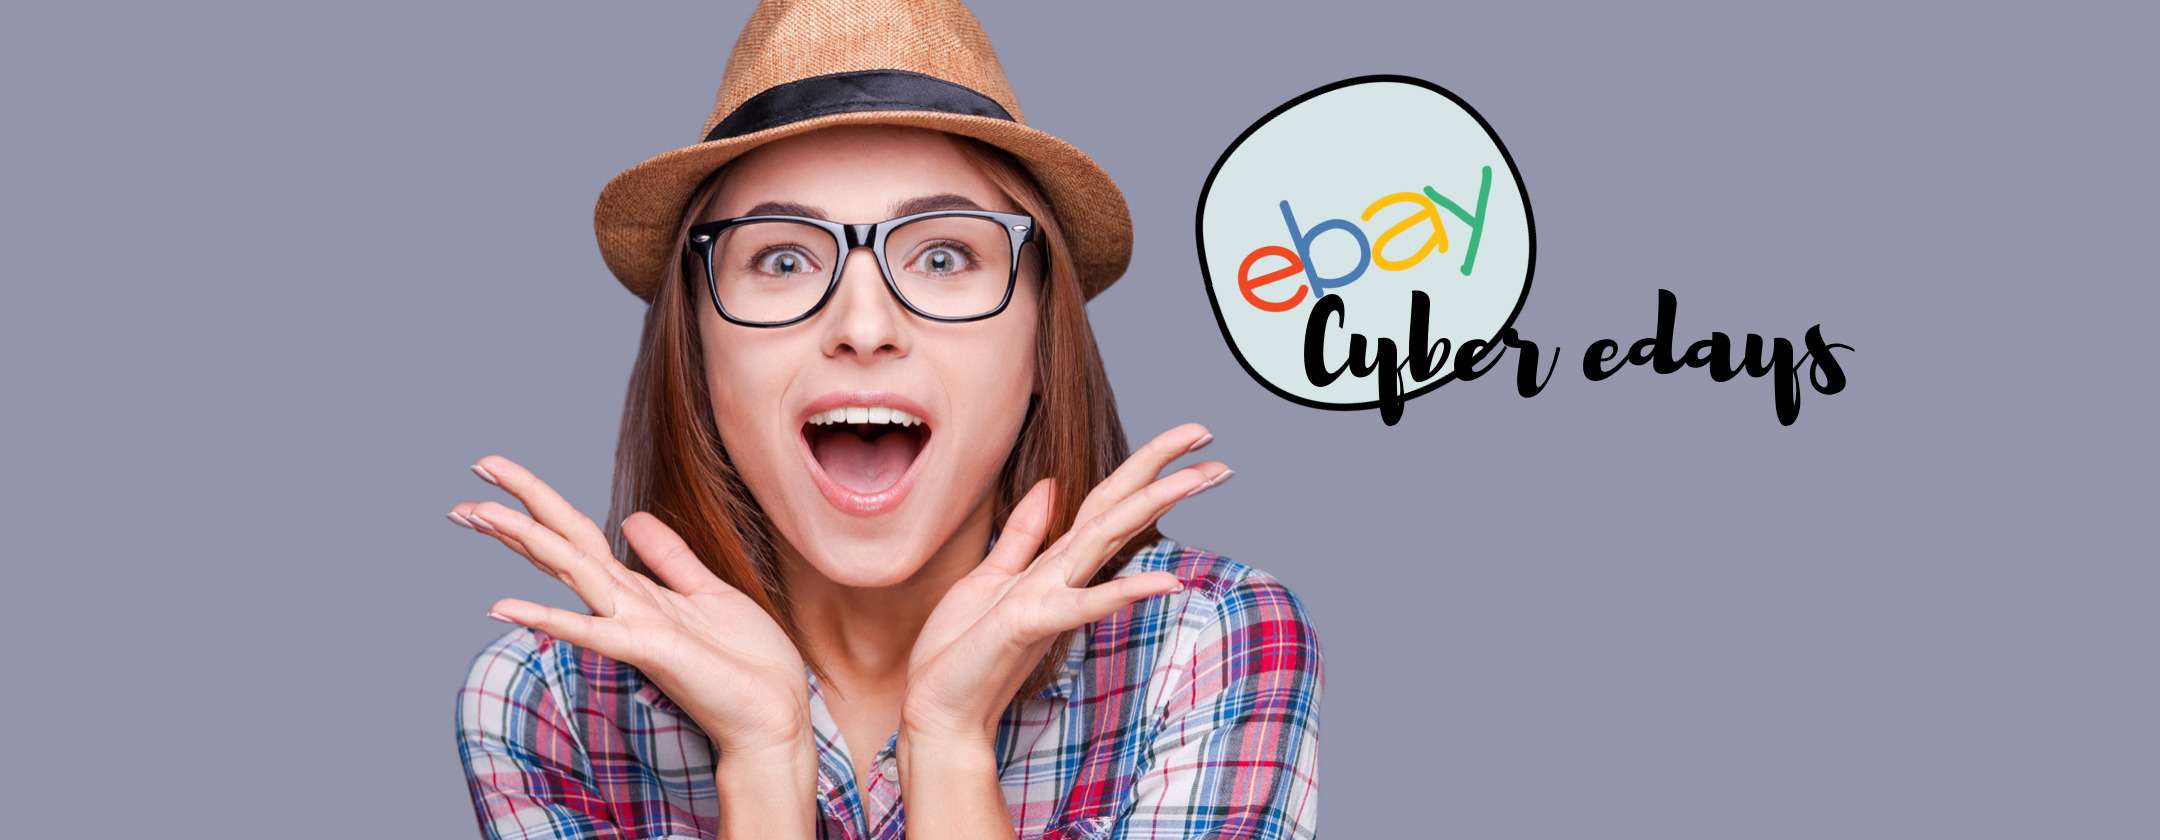 eBay Cyber edays: 3 smartphone fascia alta a meno di 300 euro